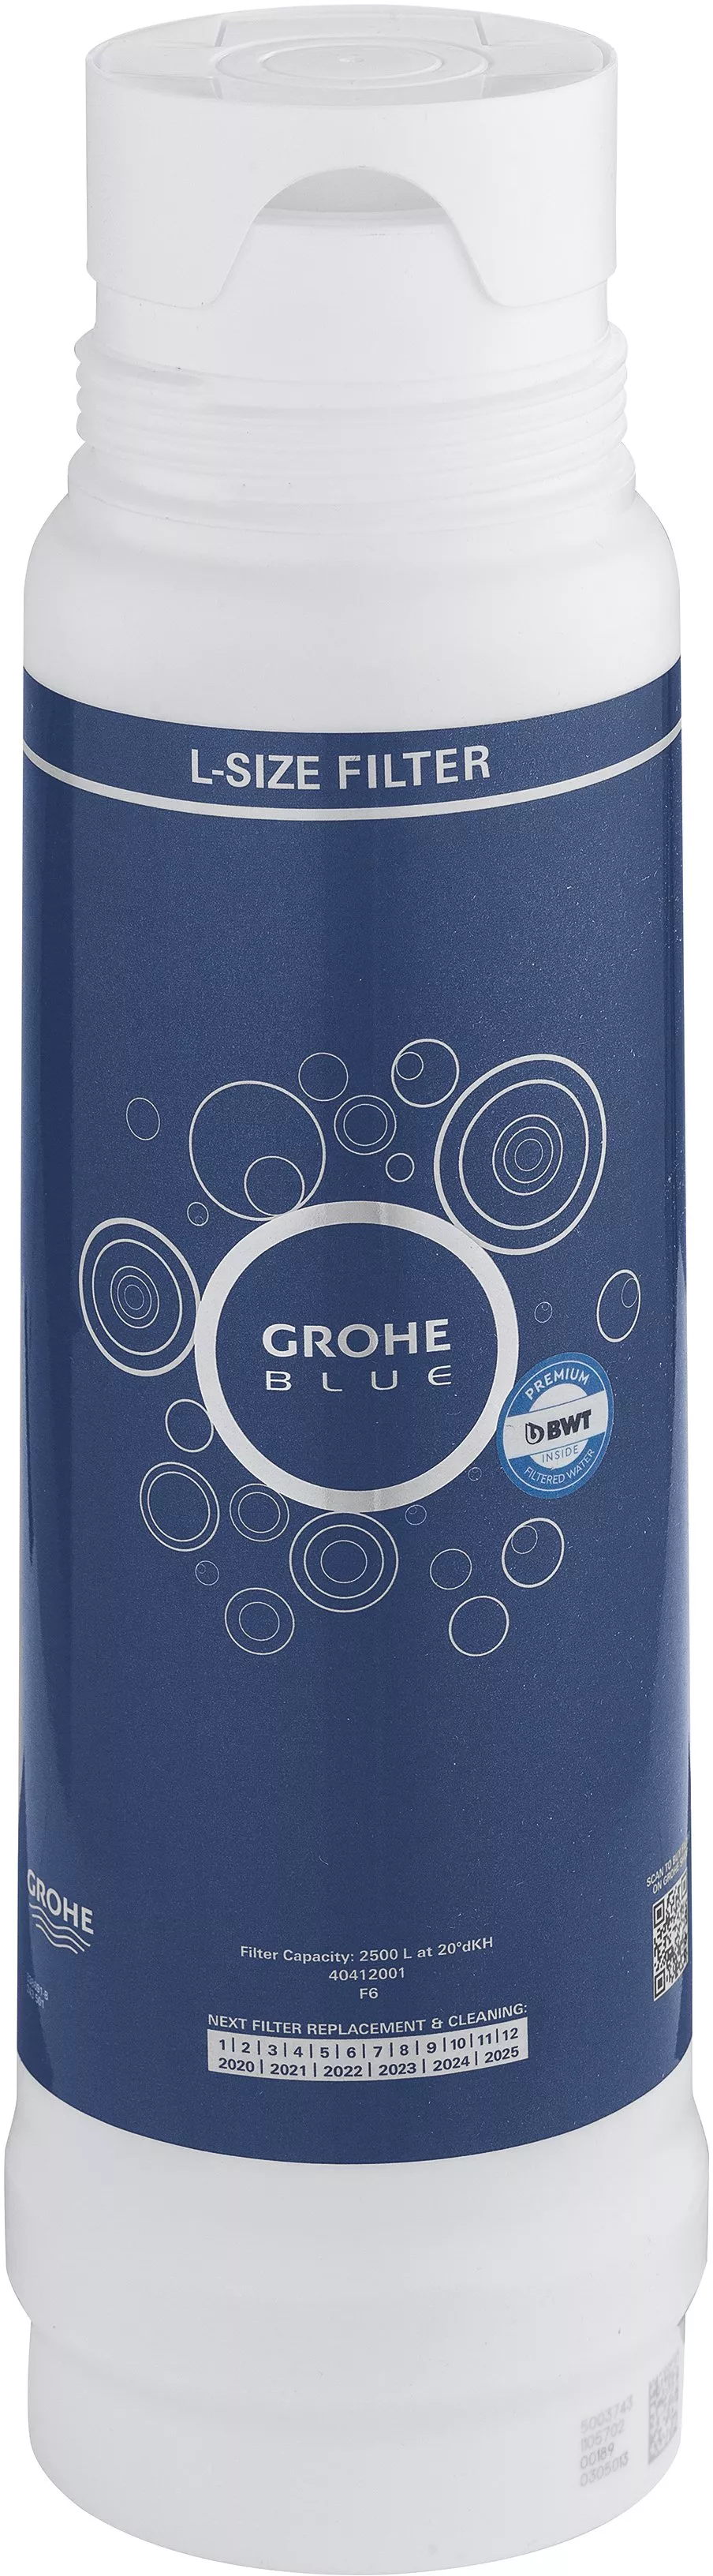 Фильтр Grohe Blue 40412001 L-Size, без насадки, цвет белый